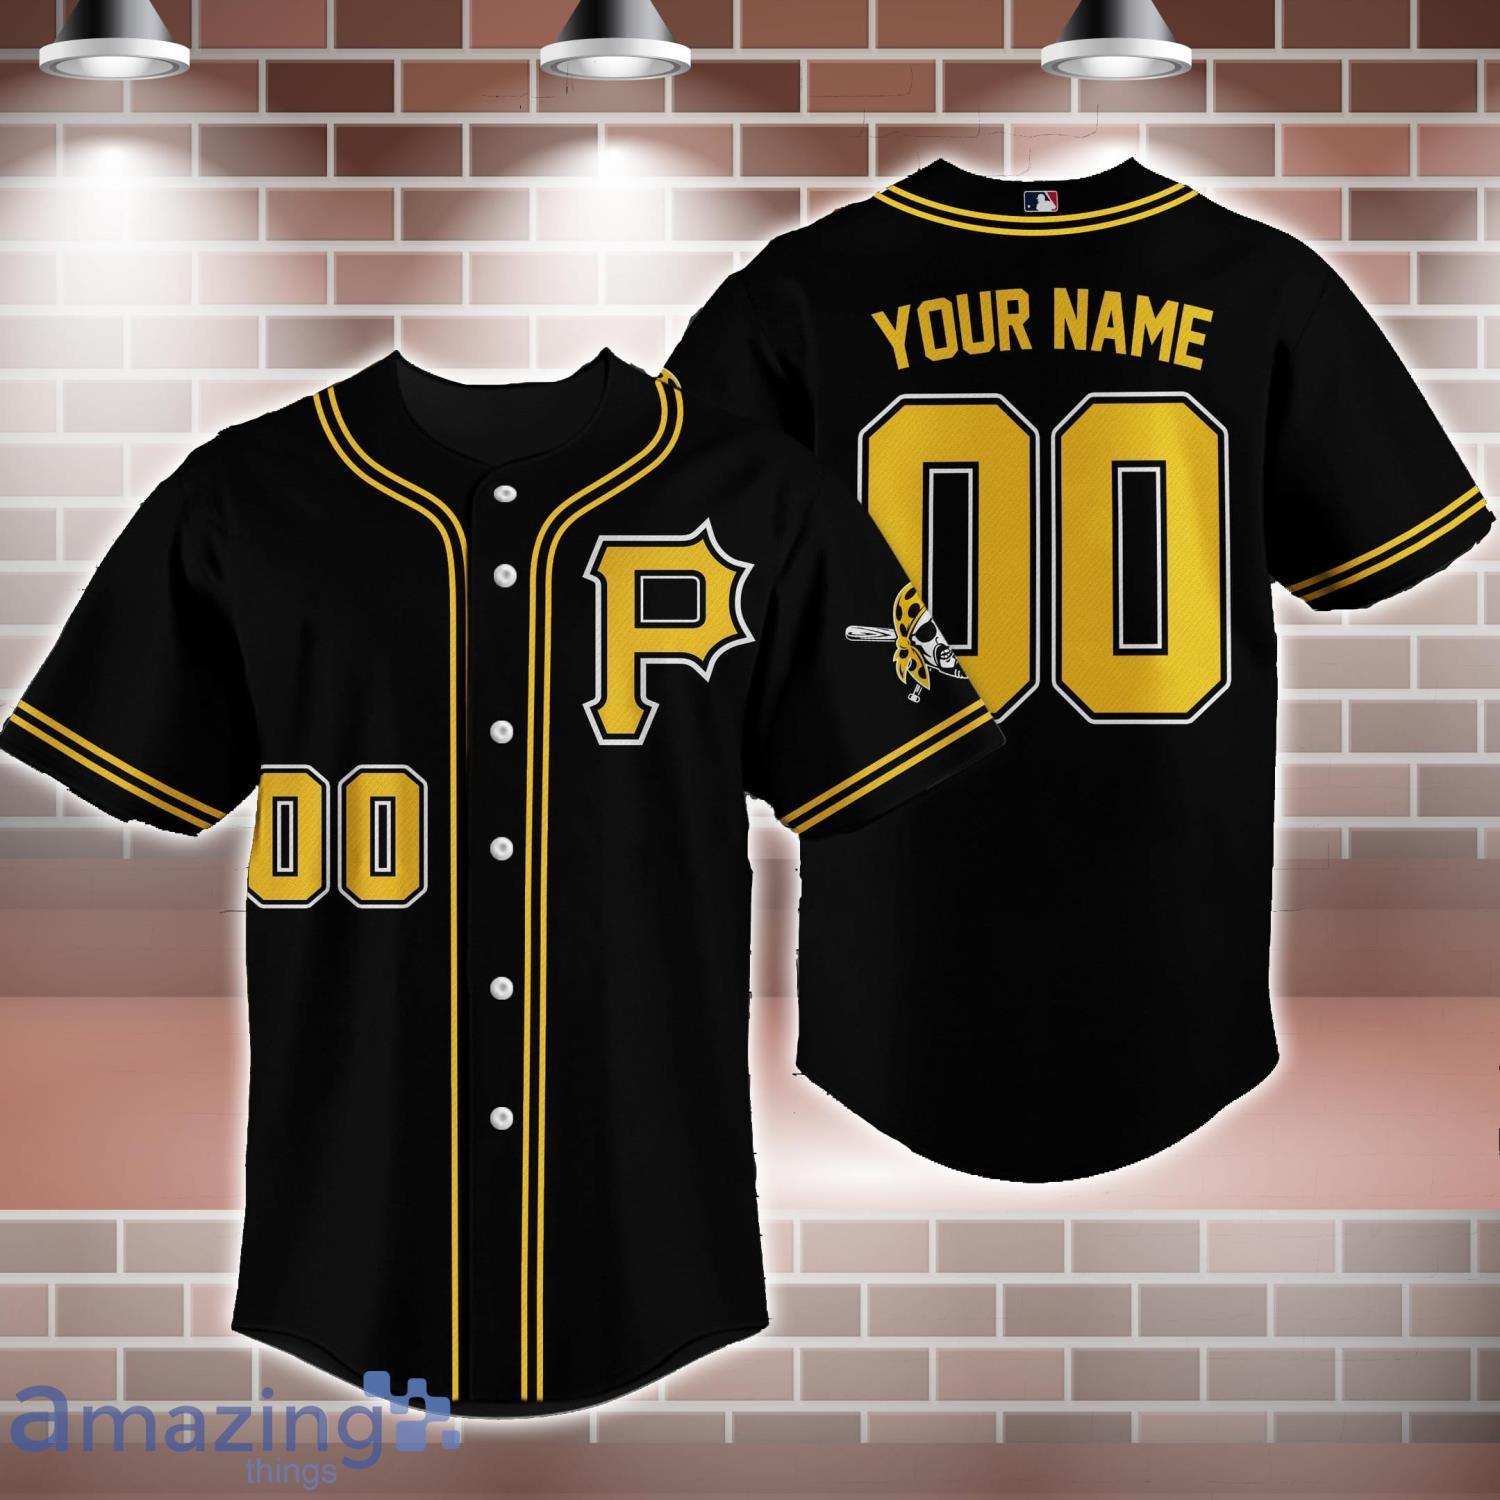 Pittsburgh Pirates MLB Baseball Jersey Shirt Custom Name And